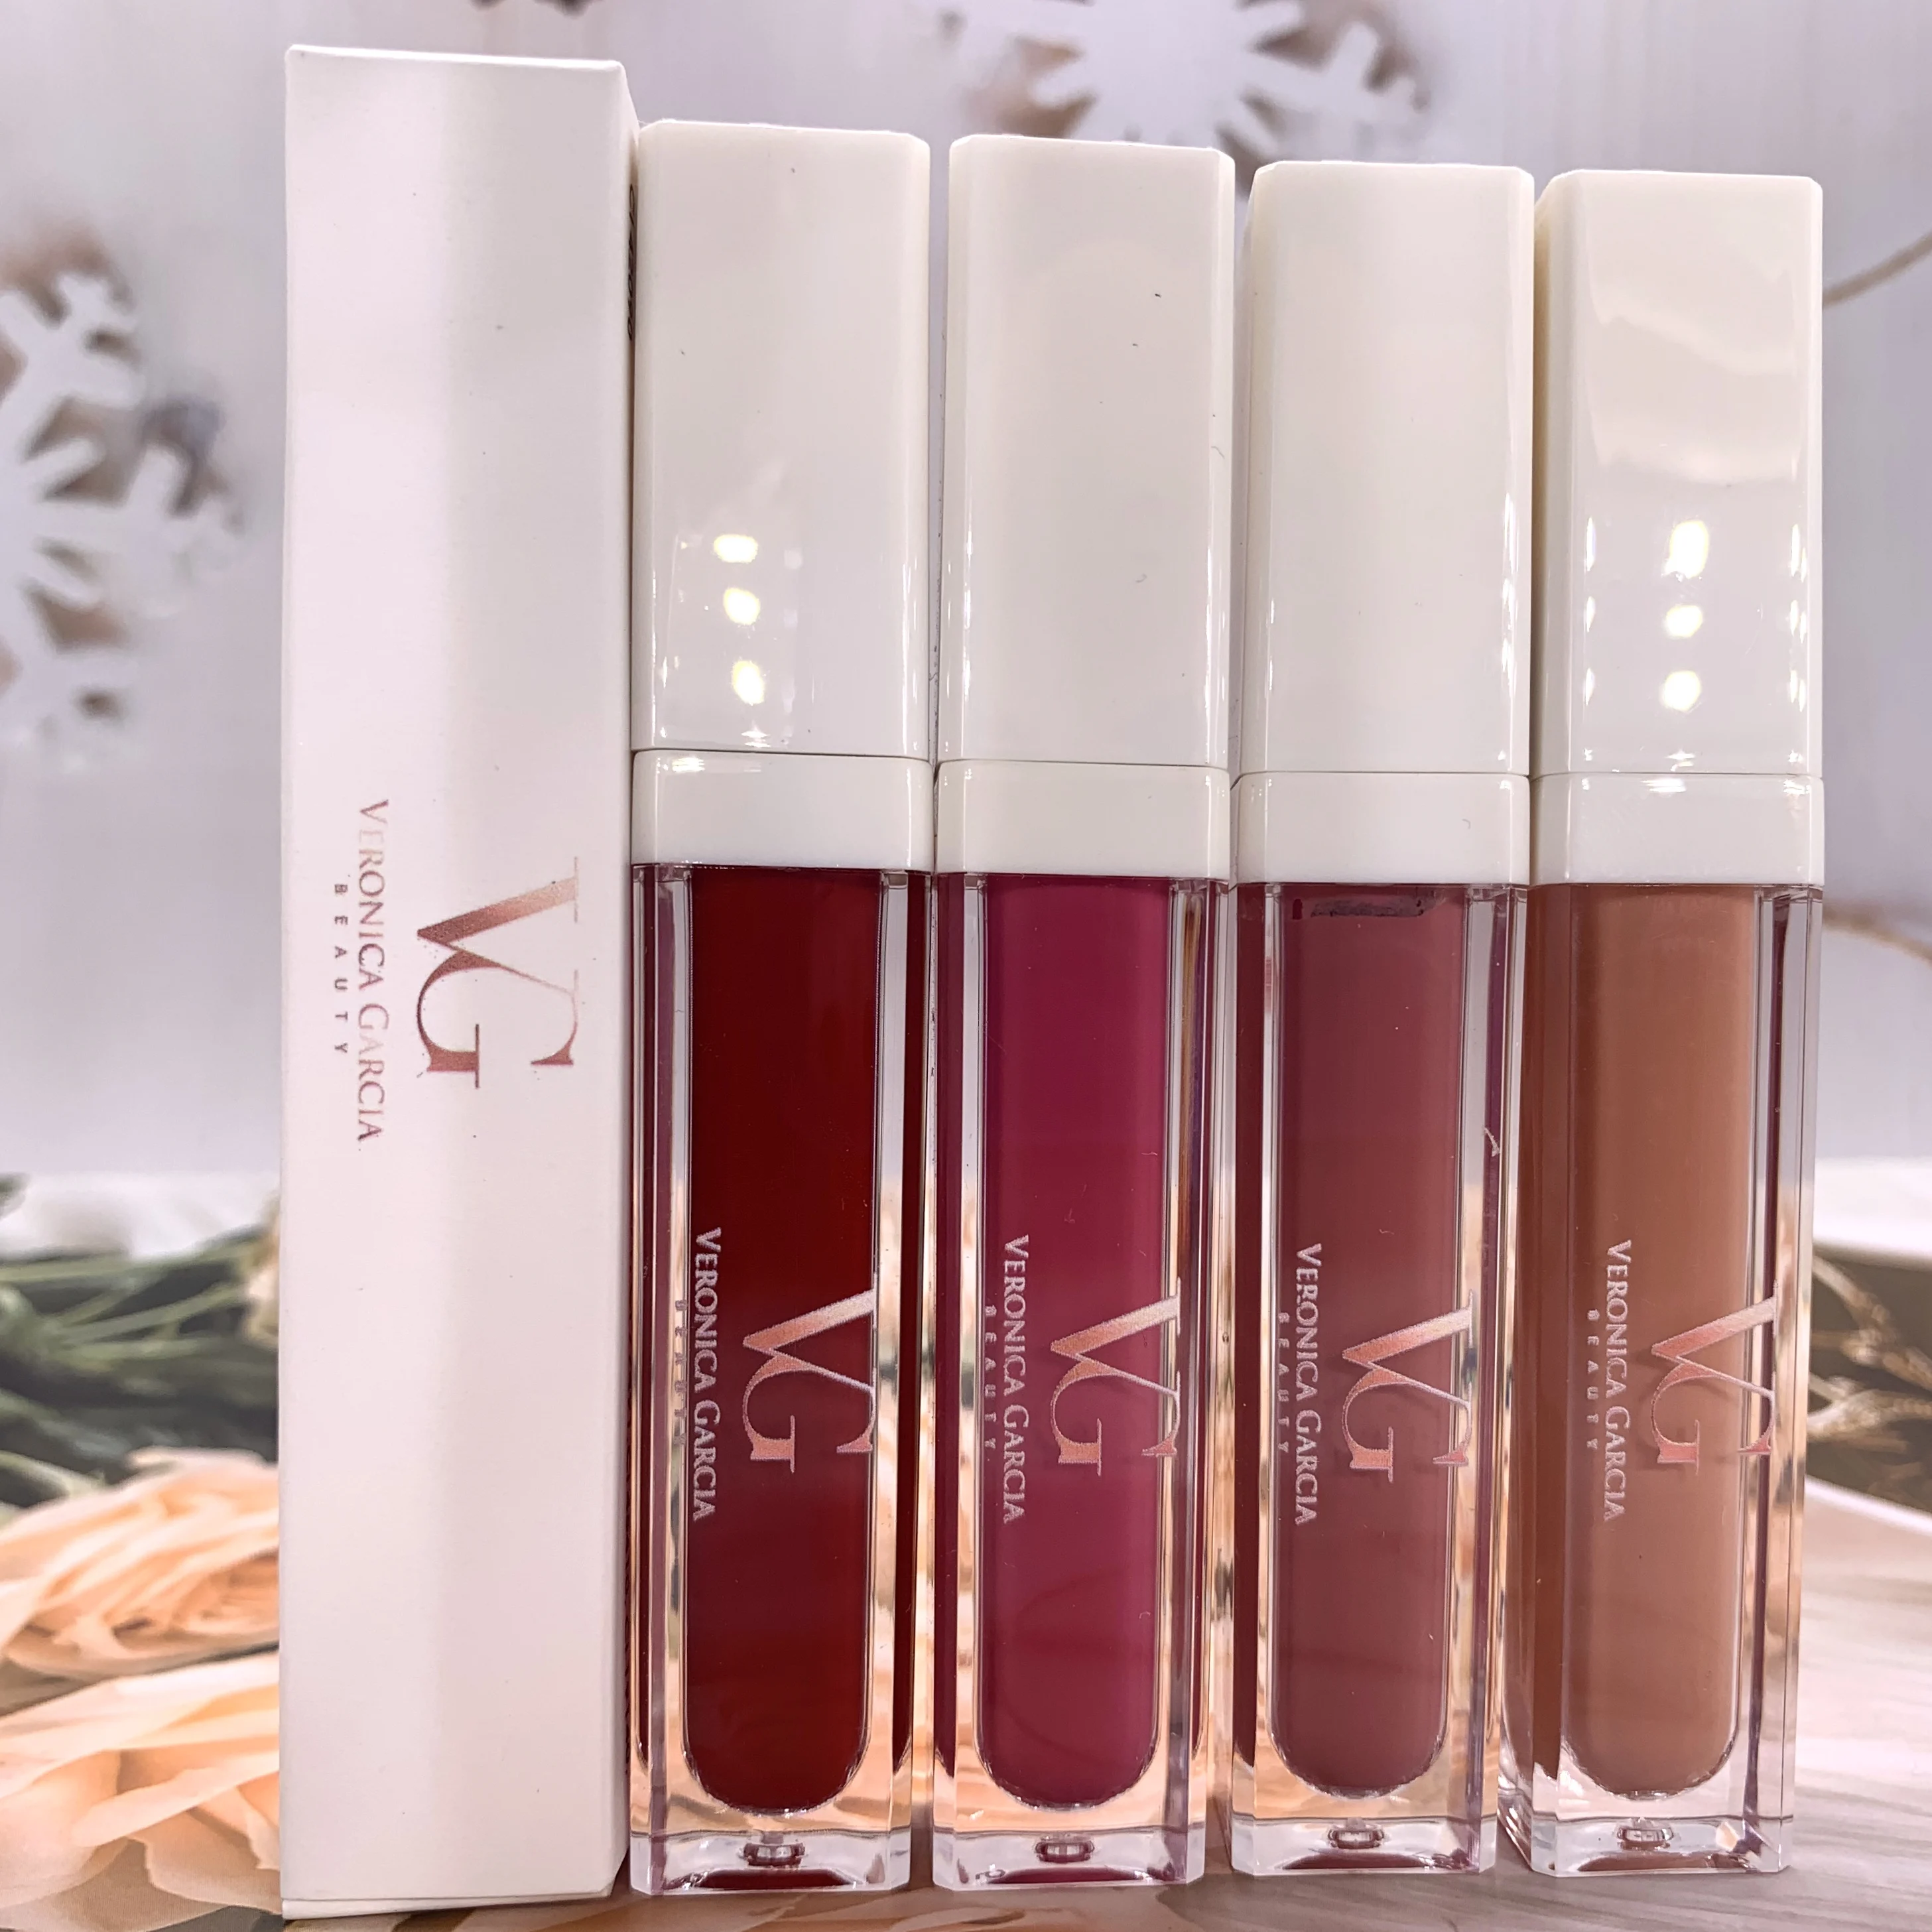 

Makeup Matte Lipstick Liquid Waterproof Long Lasting Red Velvet Brown Nude Tint Lip Gloss